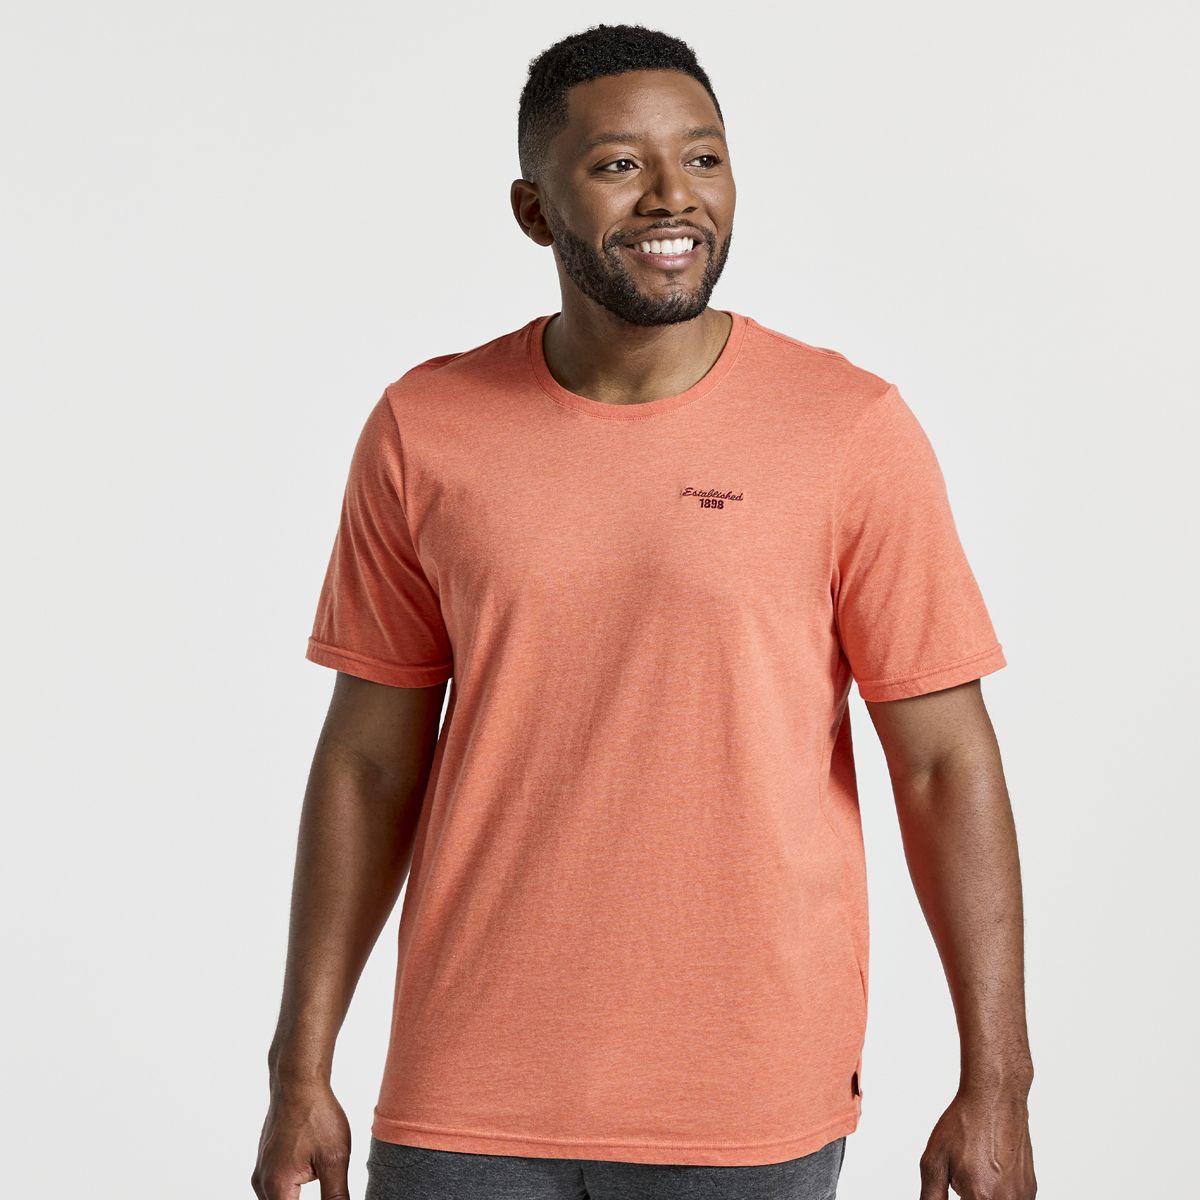 Buy Men's Short & Long-Sleeve Running Shirts